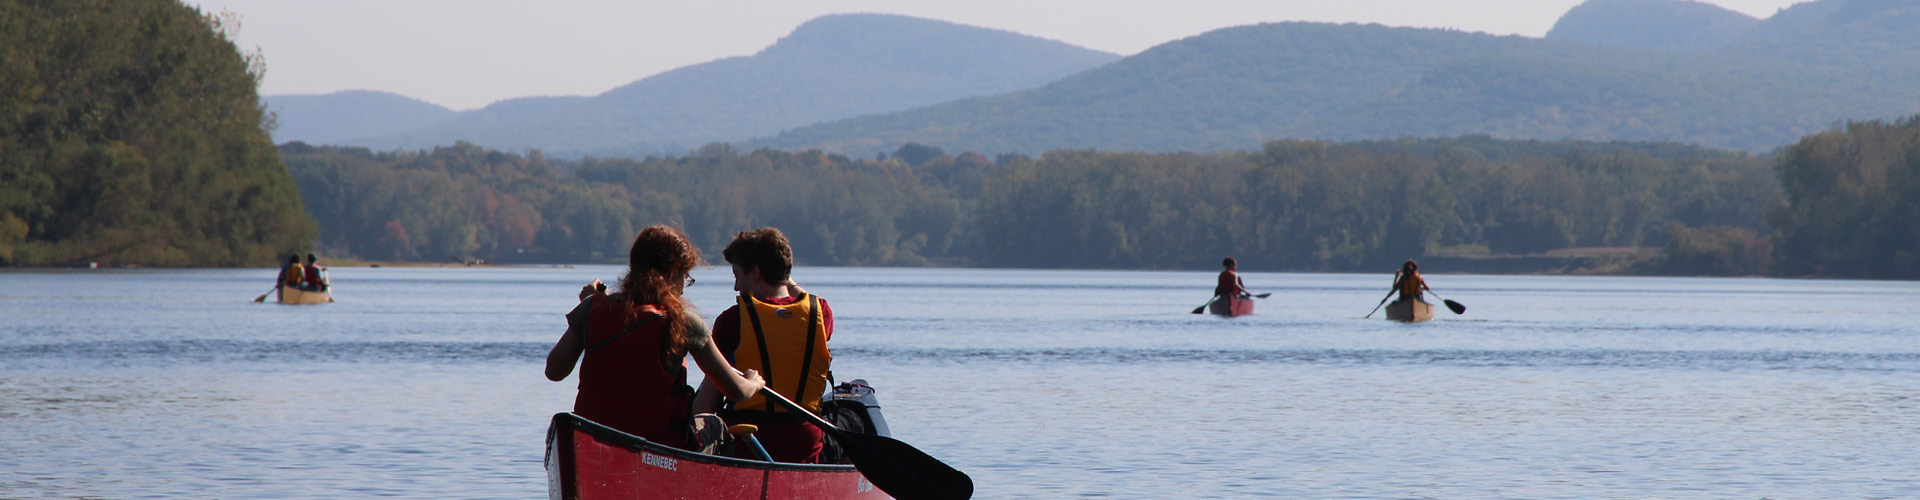 Hampshire College Students Kayaking